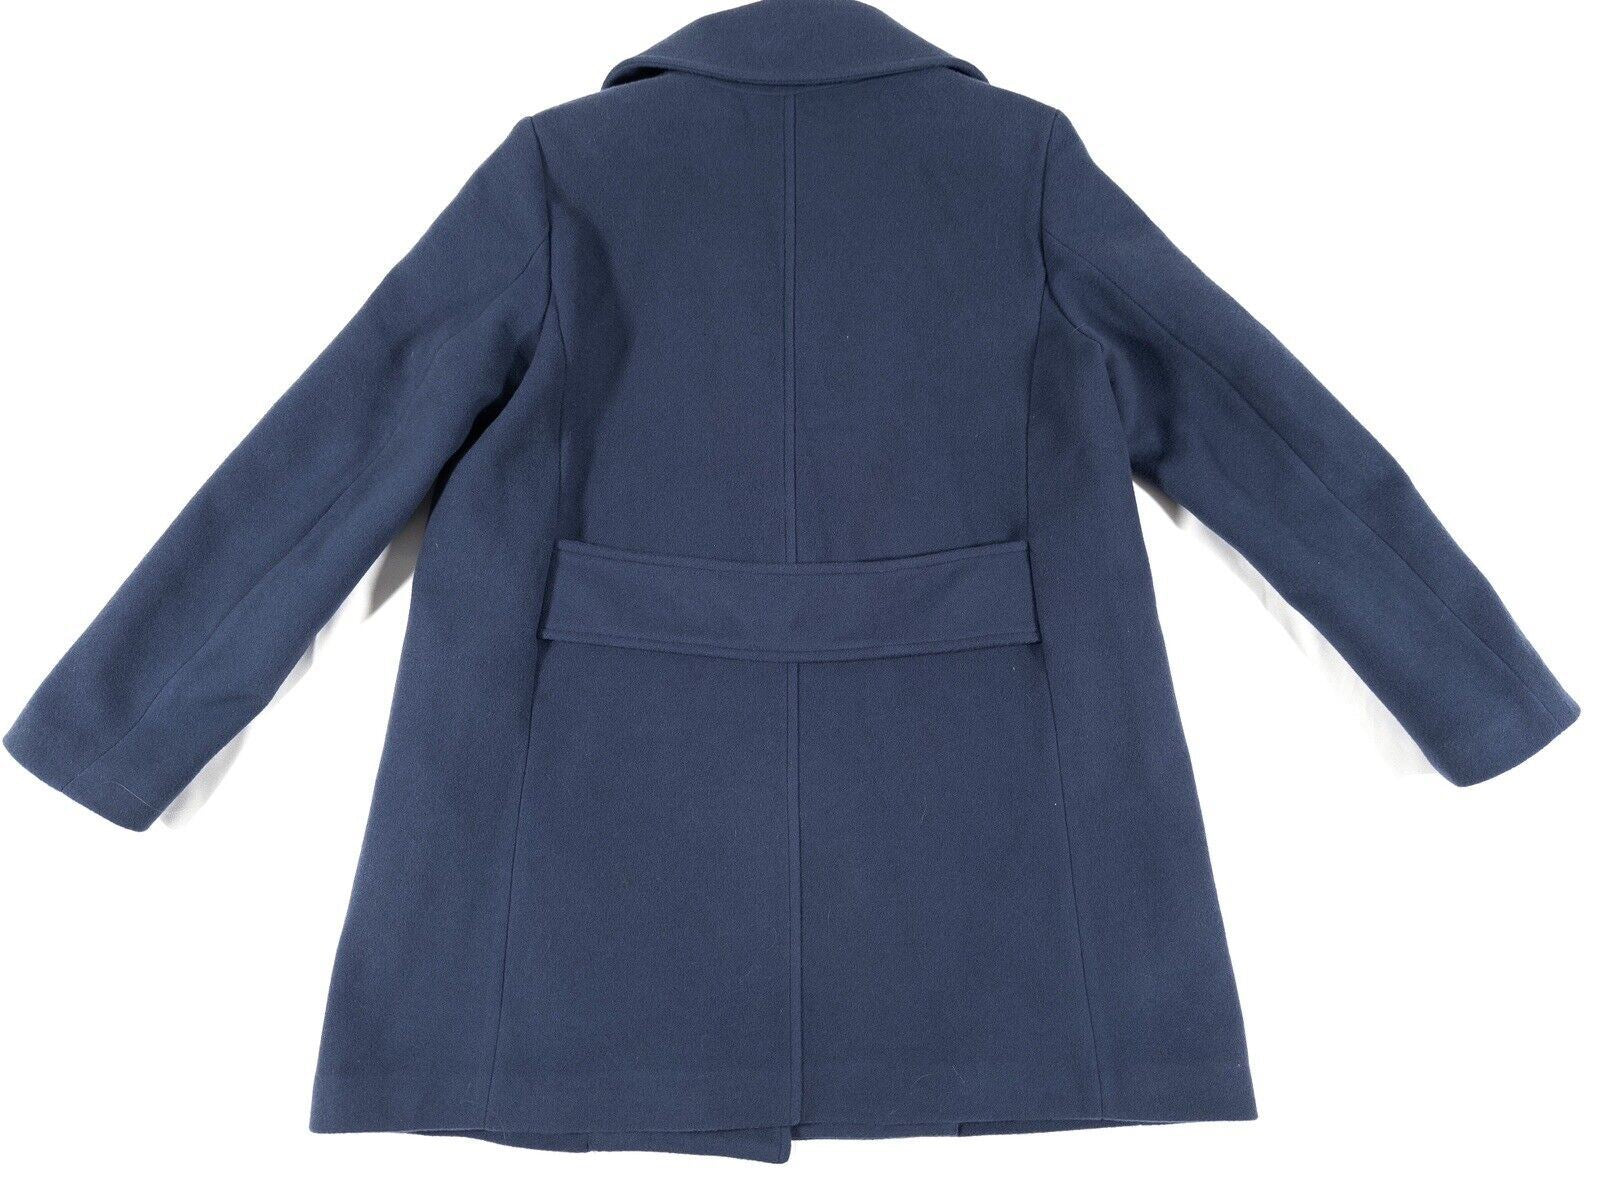 PALTO ITALIA Women's Blue Wool Coat Jacket Size UK 10